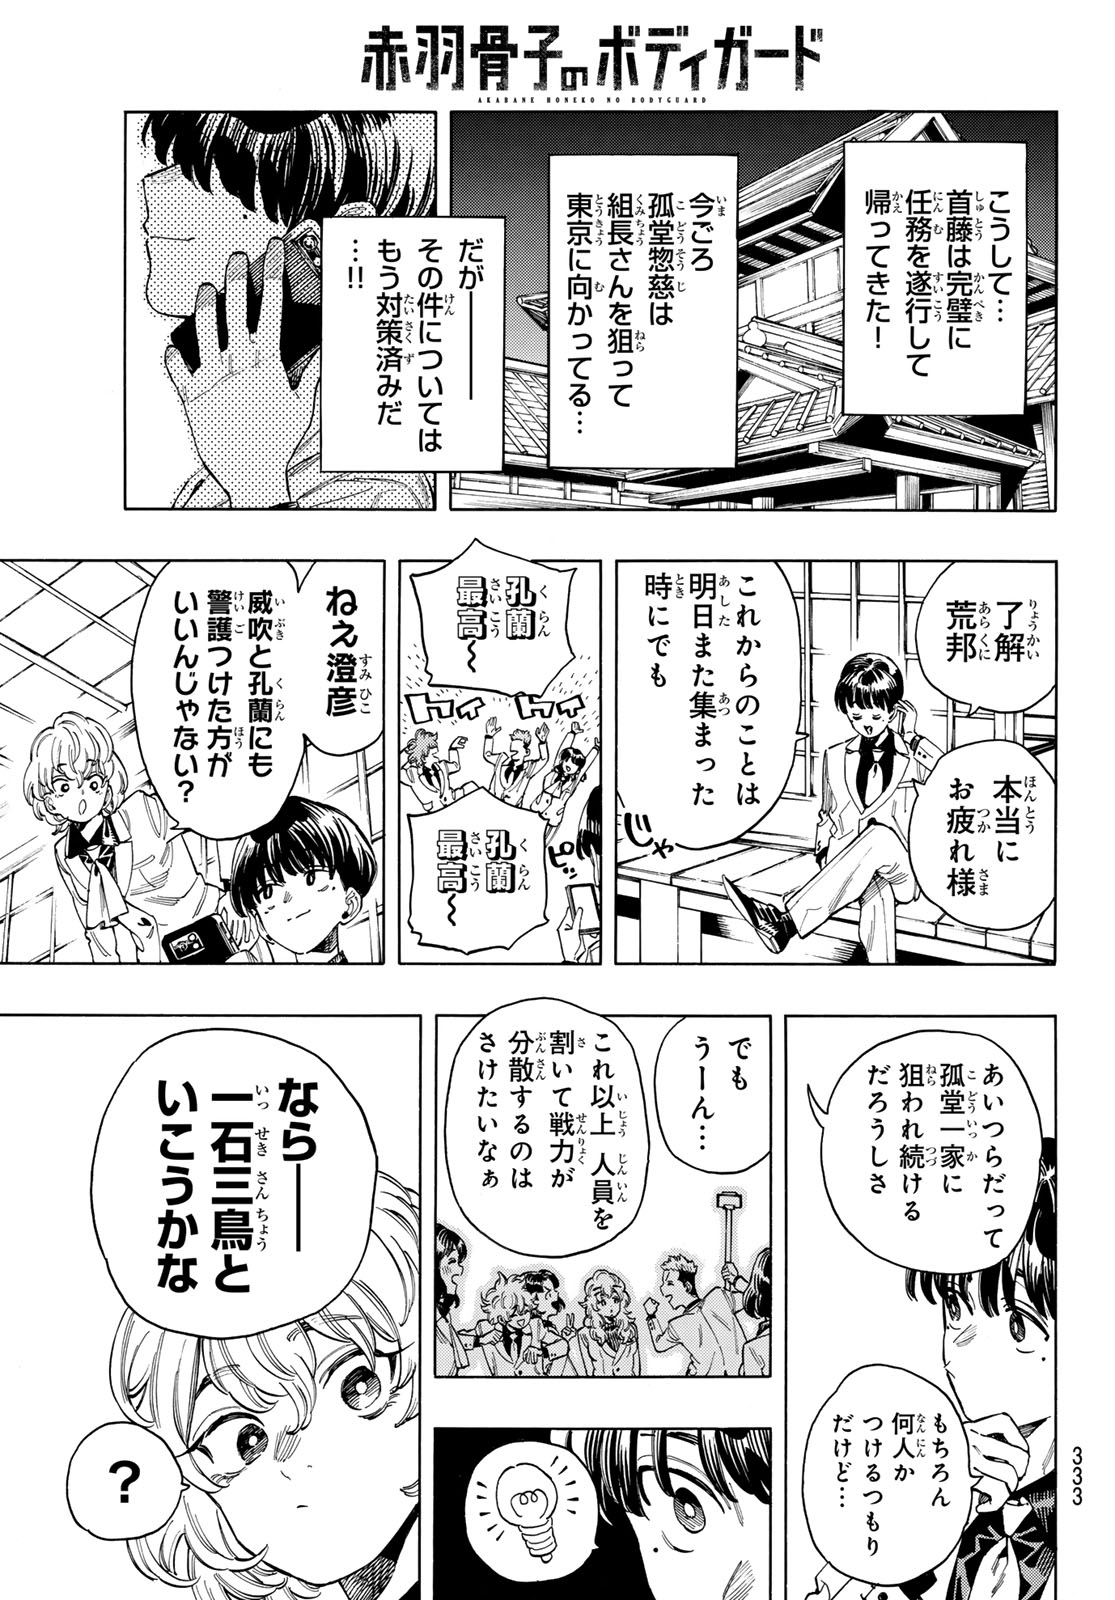 Akabane Honeko no Bodyguard - Chapter 73 - Page 19